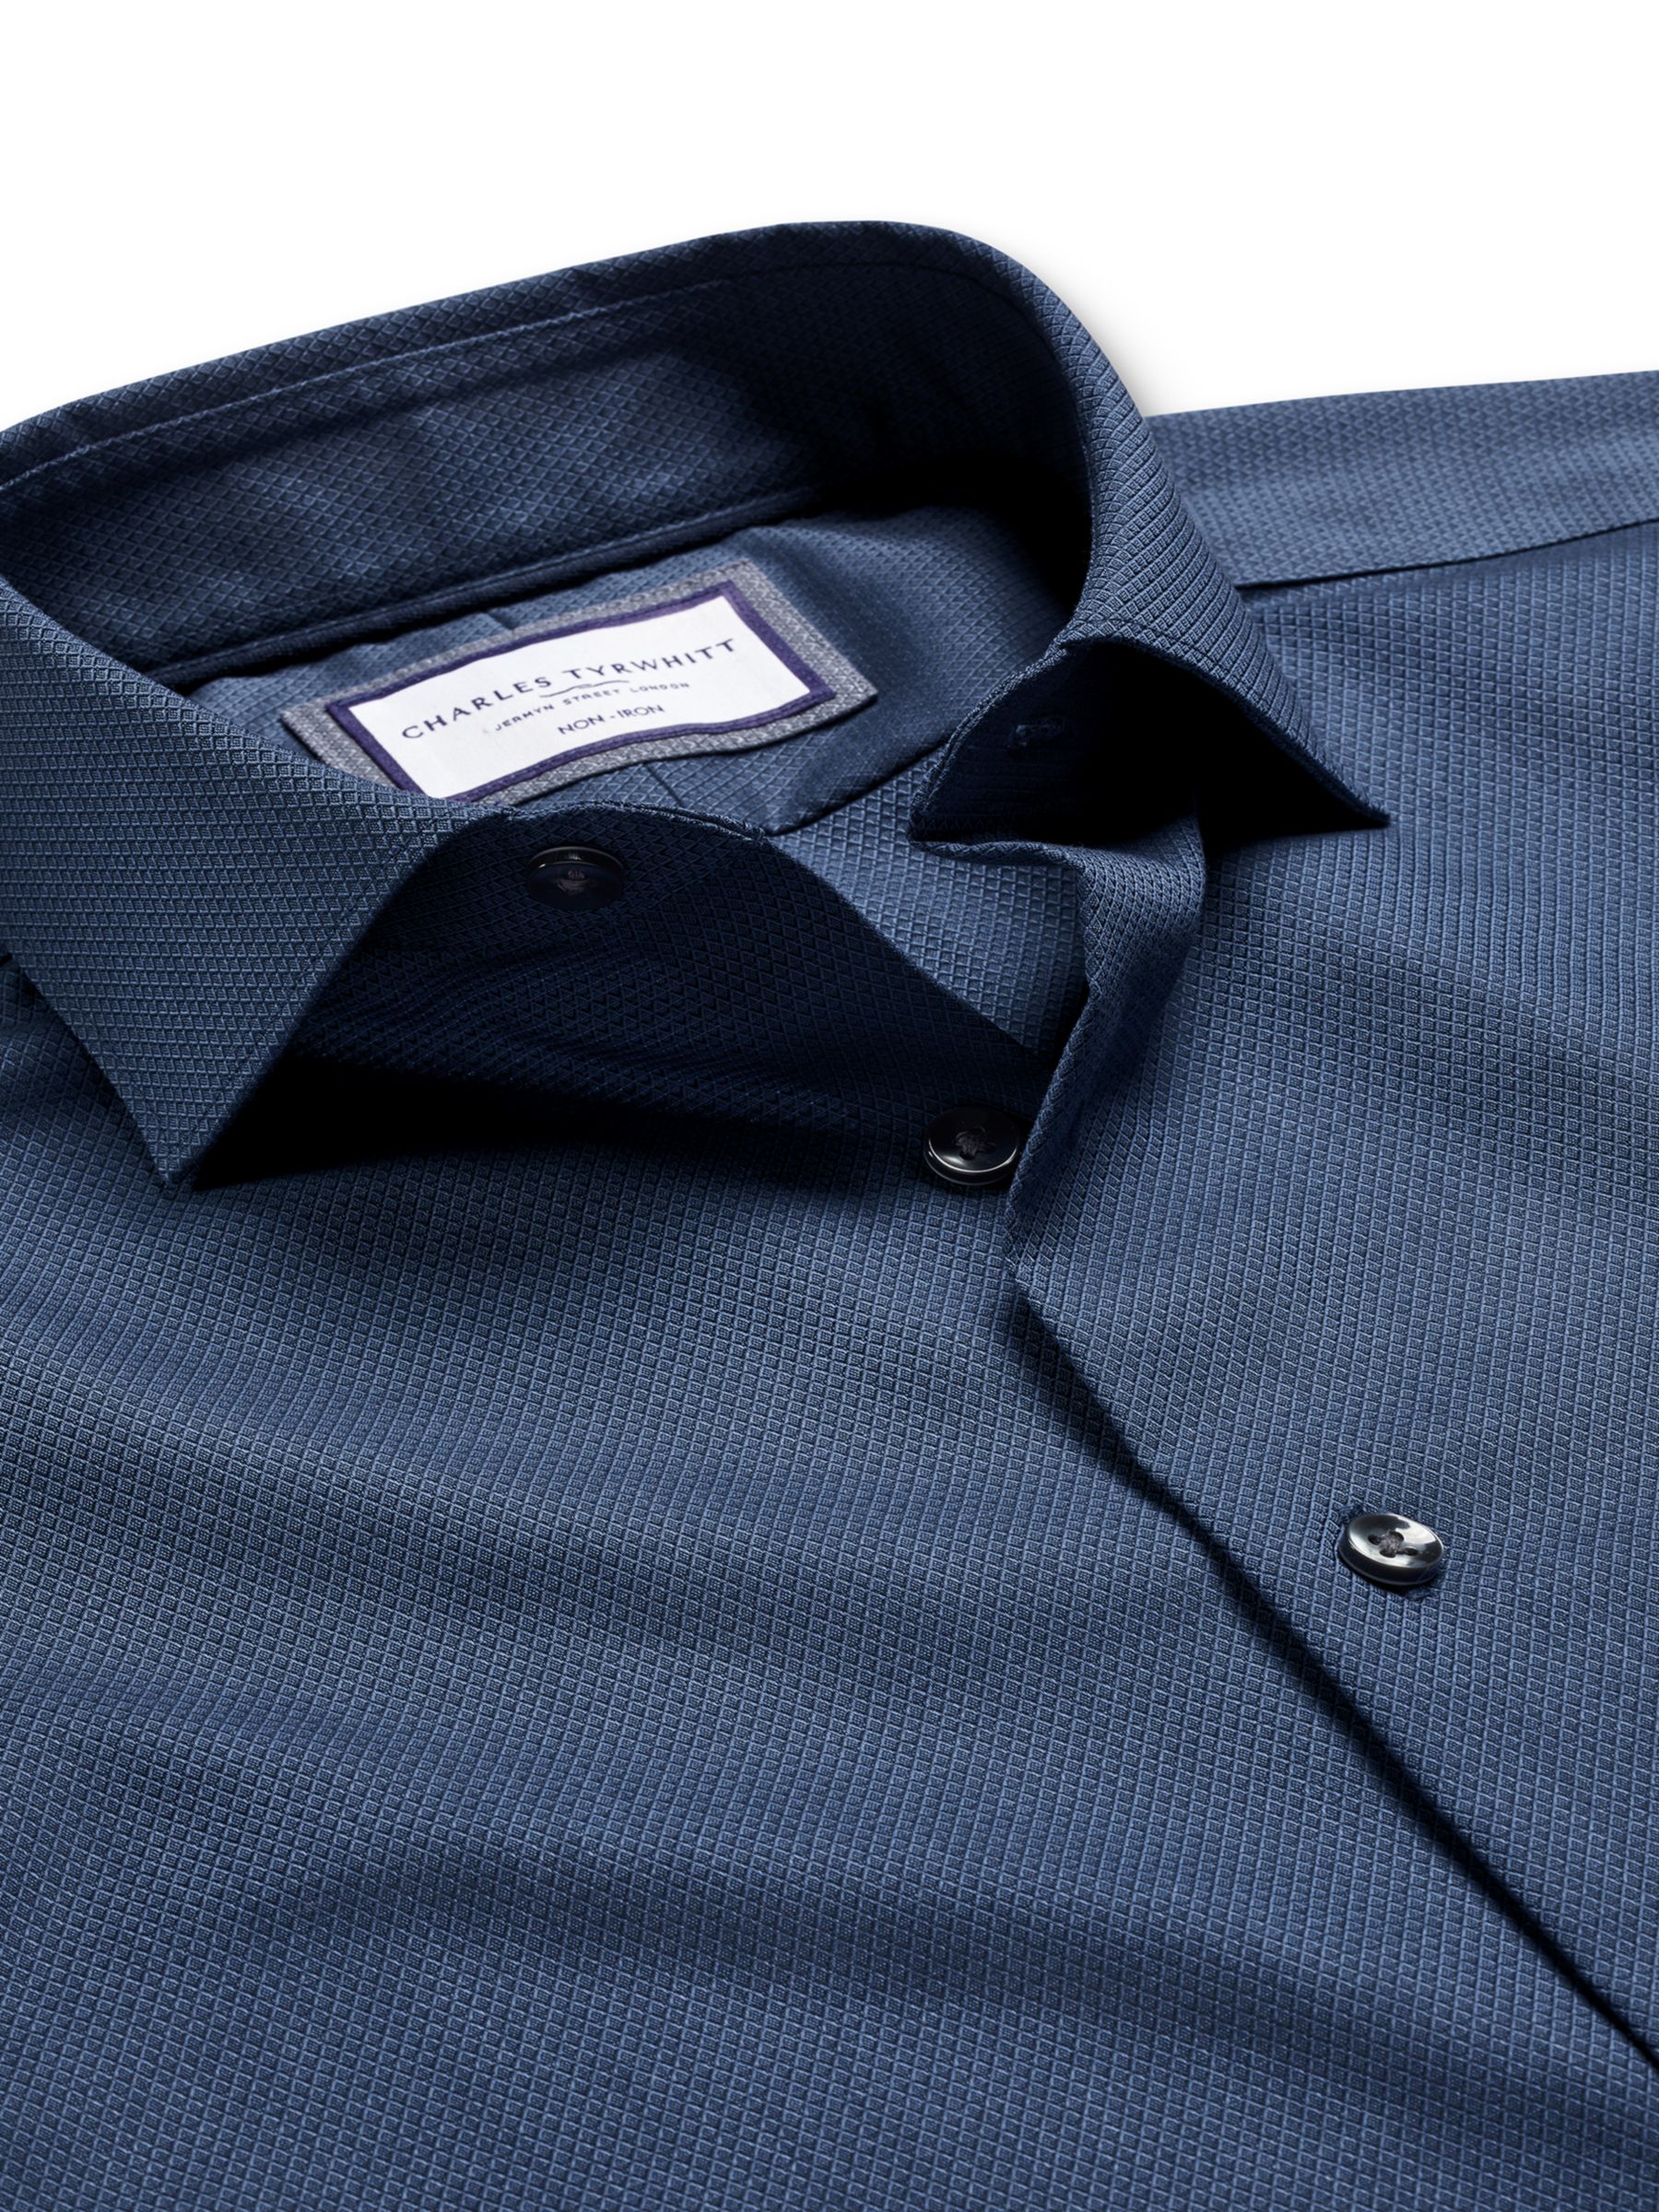 Charles Tyrwhitt Diamond Stretch Texture Non-Iron Slim Fit Shirt, Denim ...